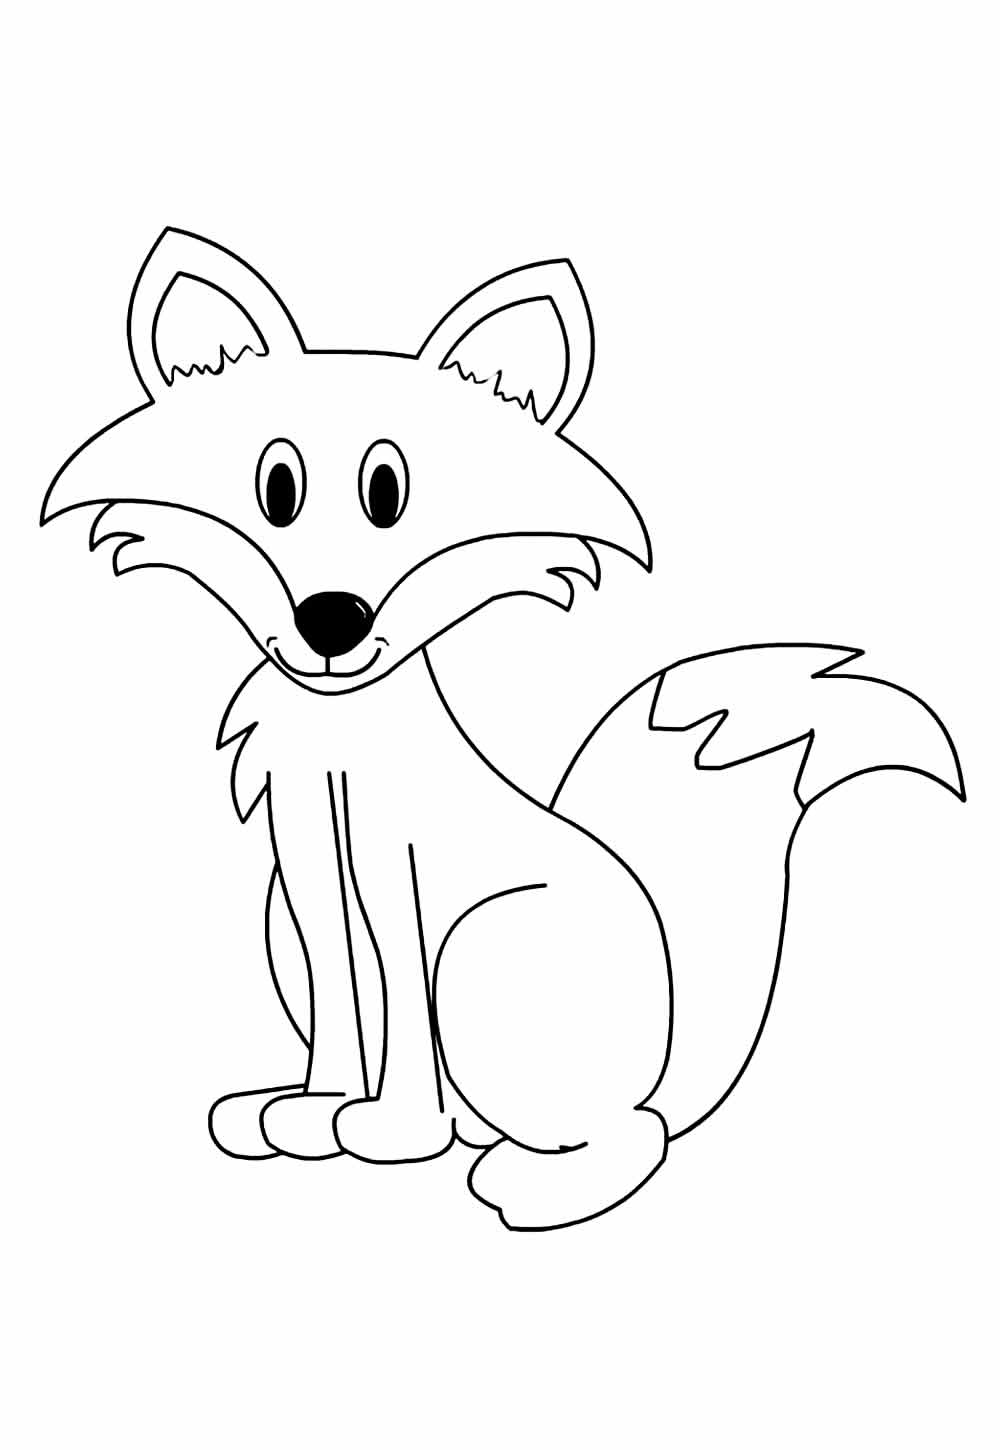 Desenho de animal para colorir